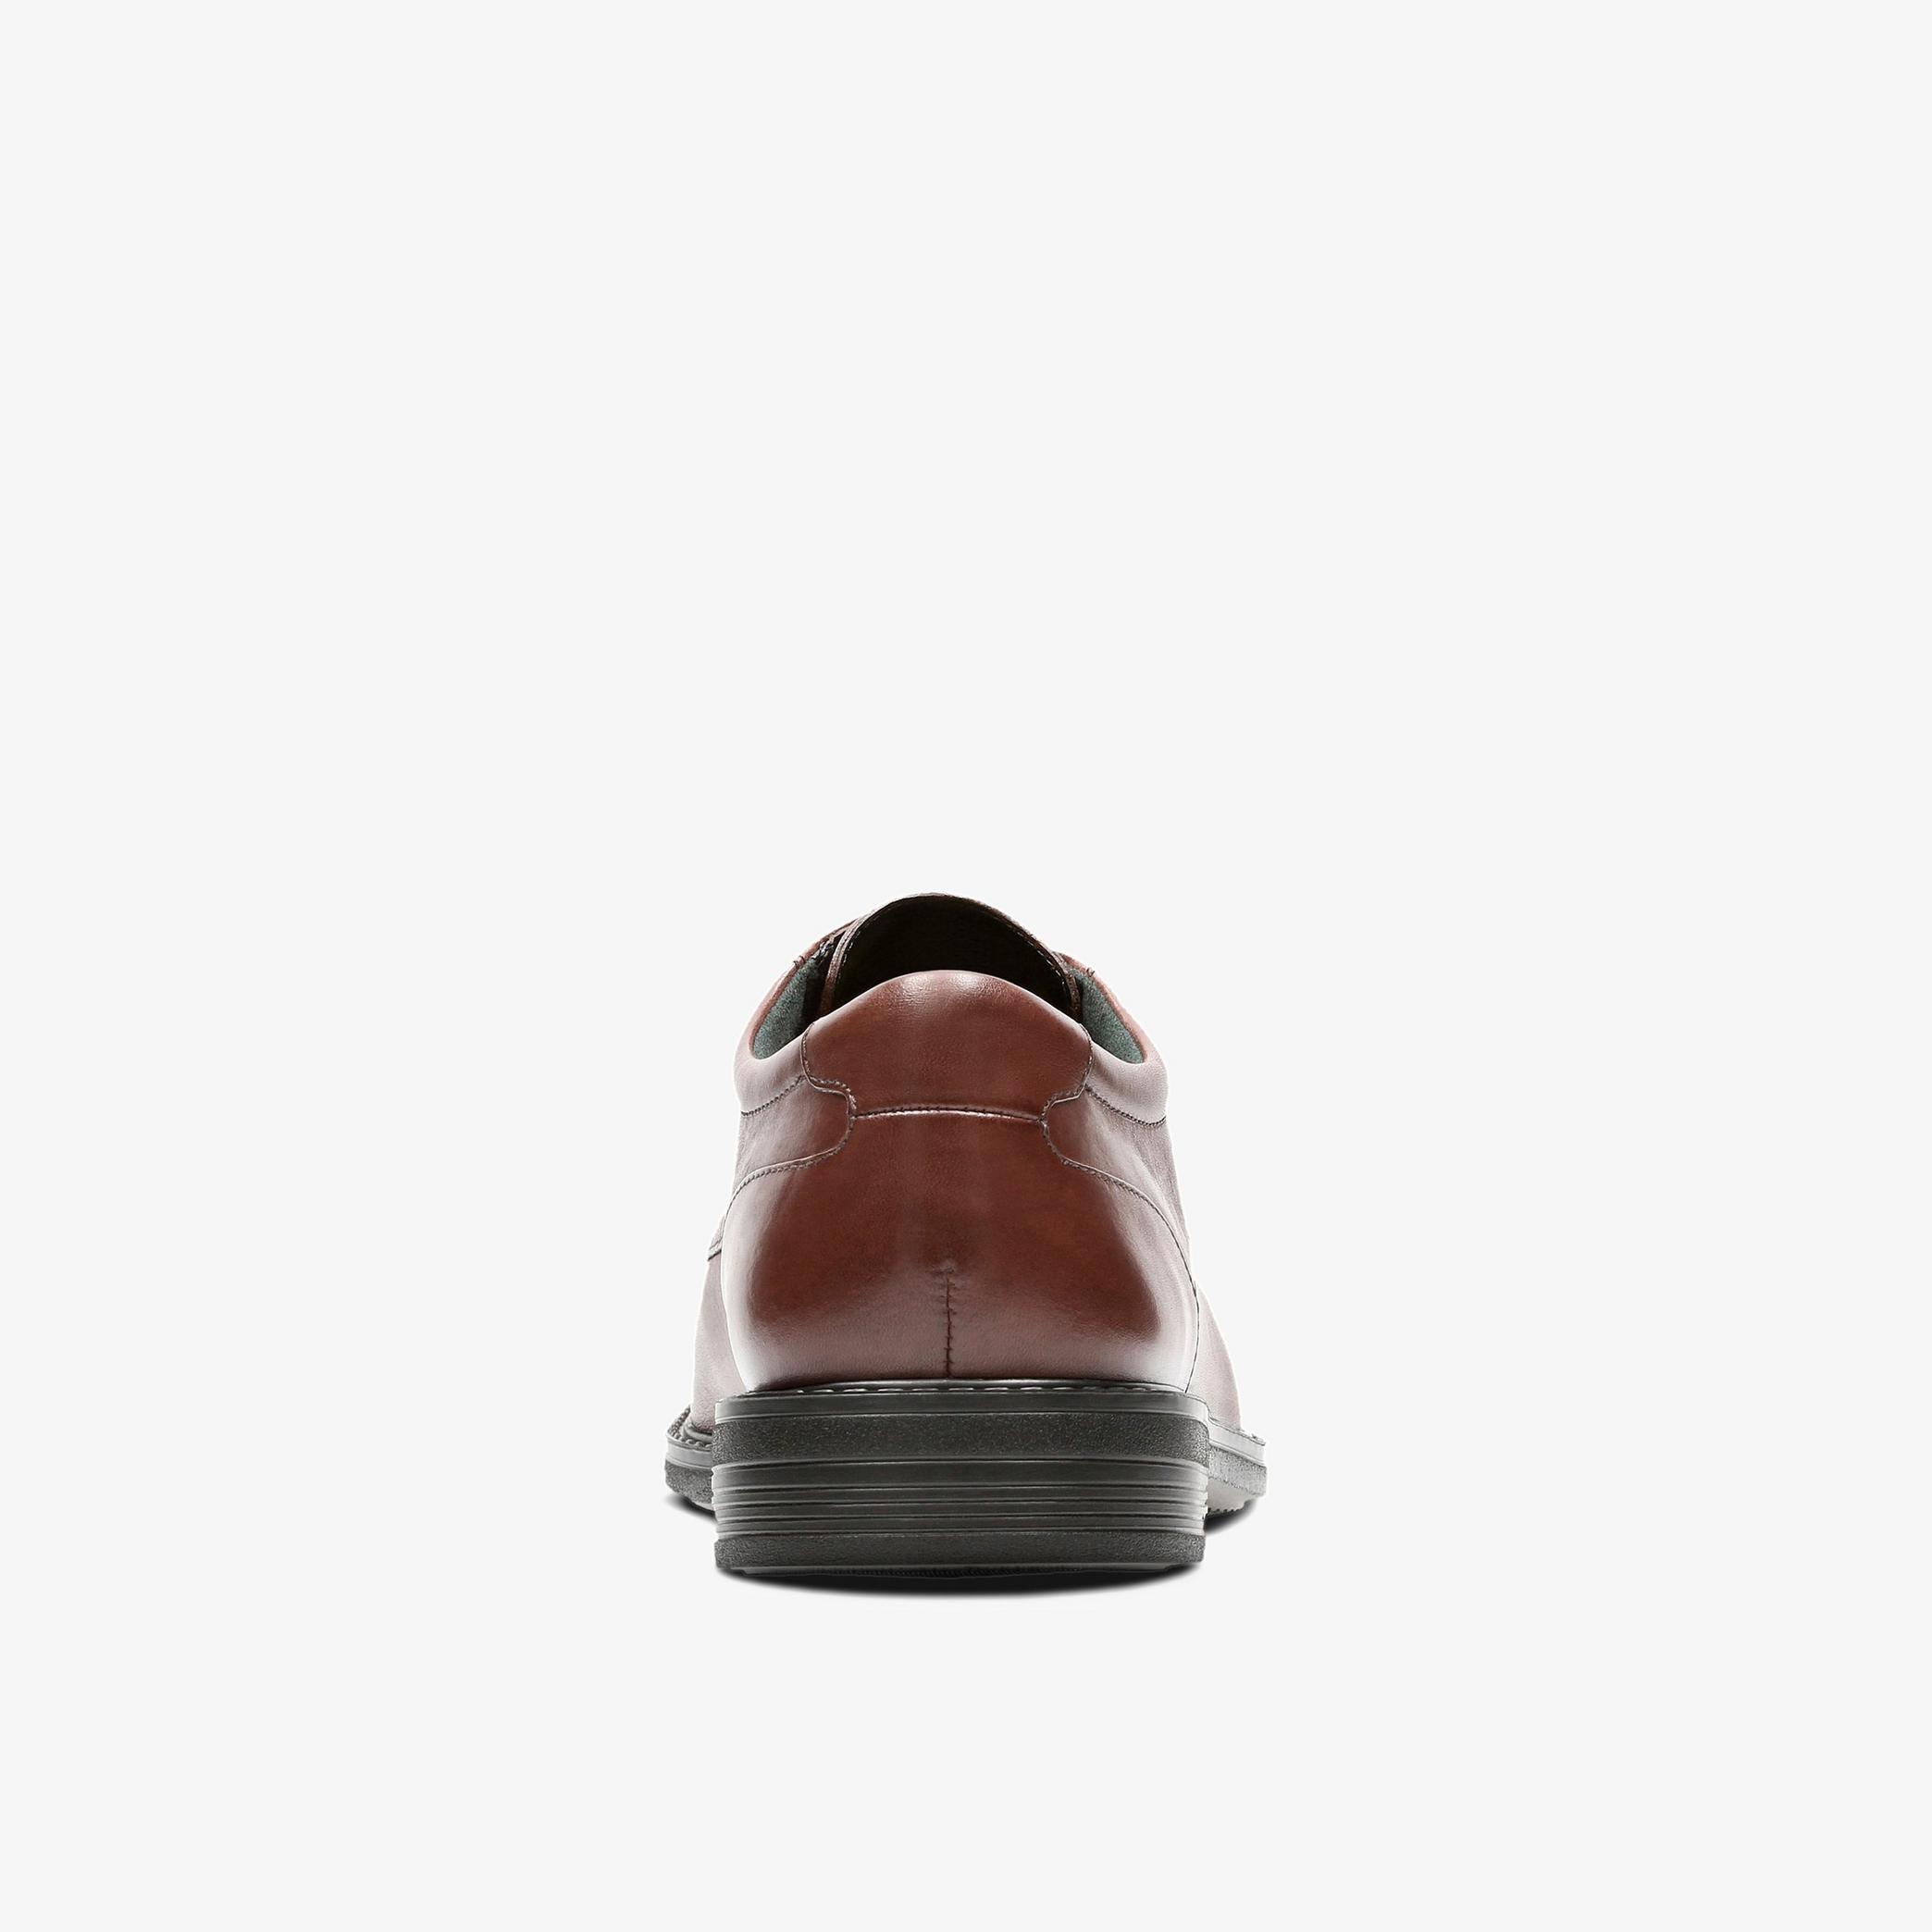 Wenham Cap II Brown Leather Derby Shoe, view 5 of 6